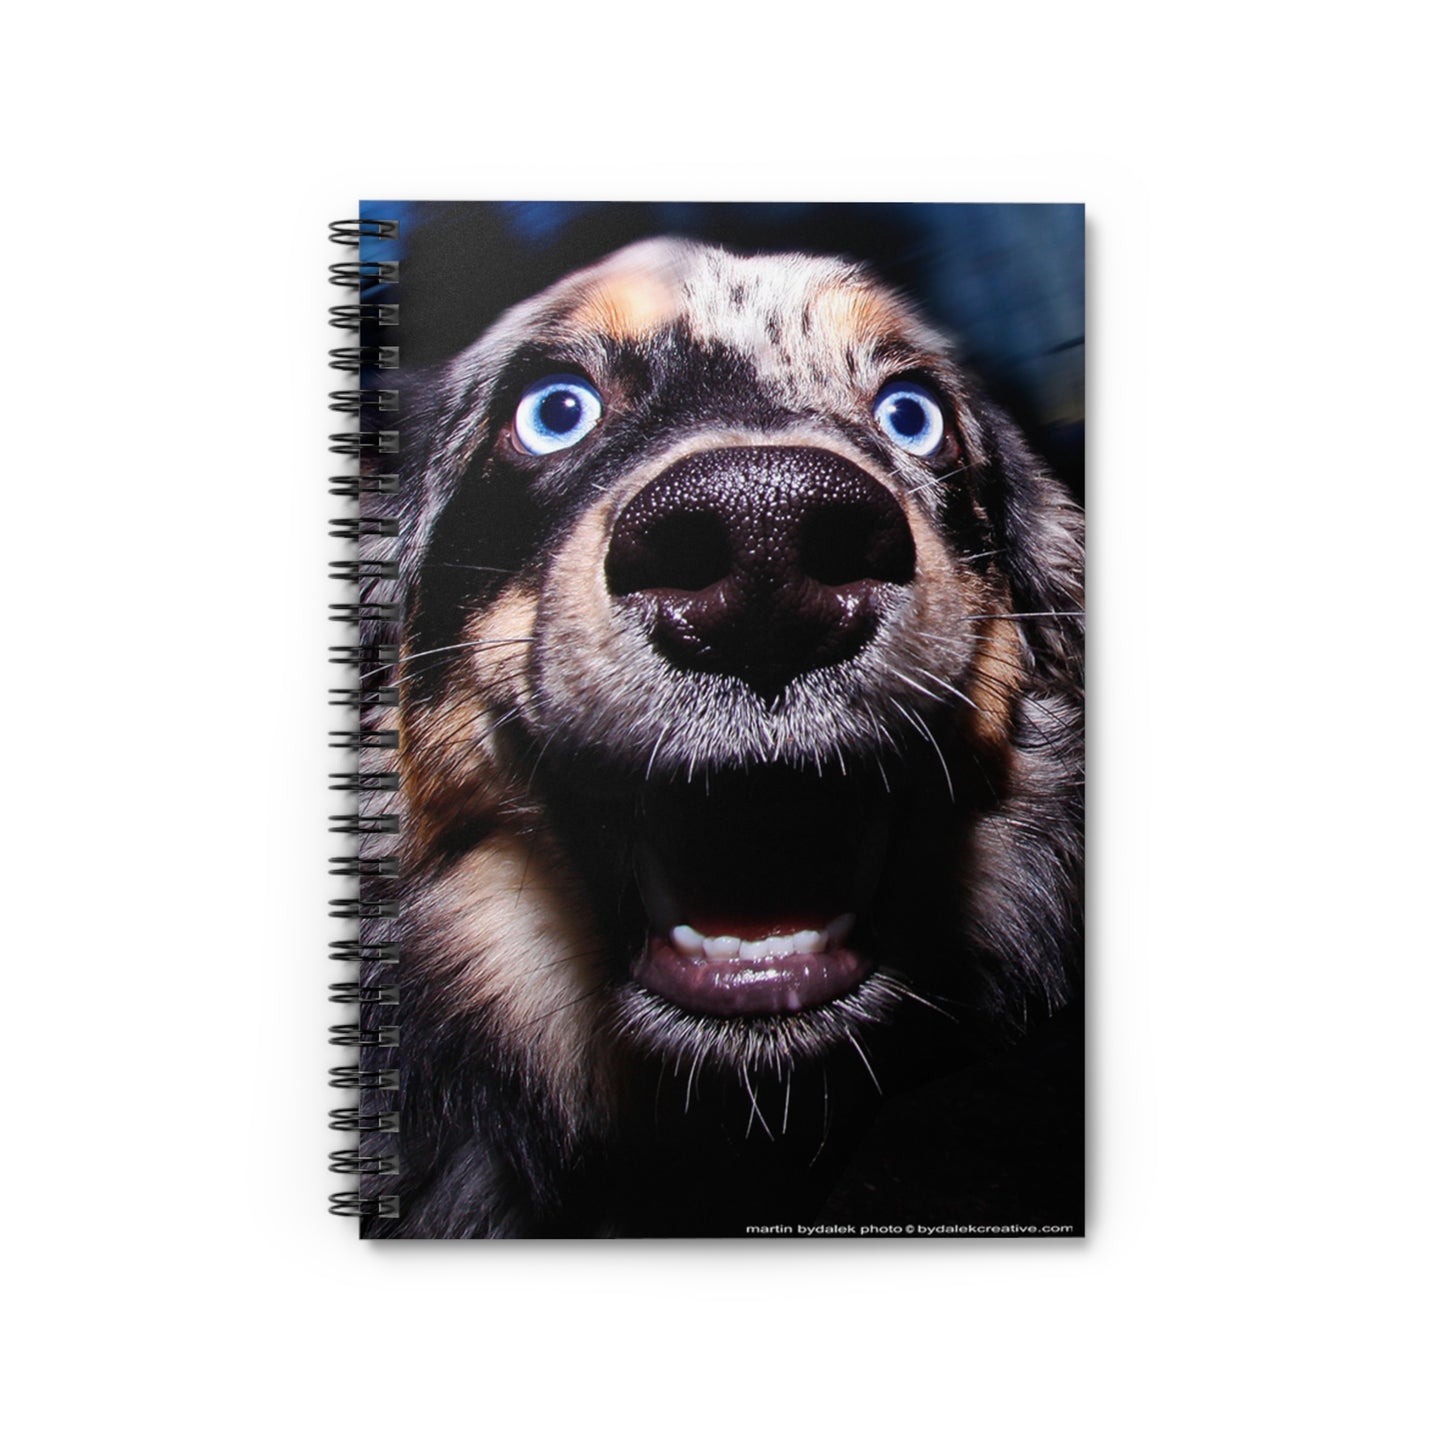 Dog Boops Spiral Notebook - Ruled Line